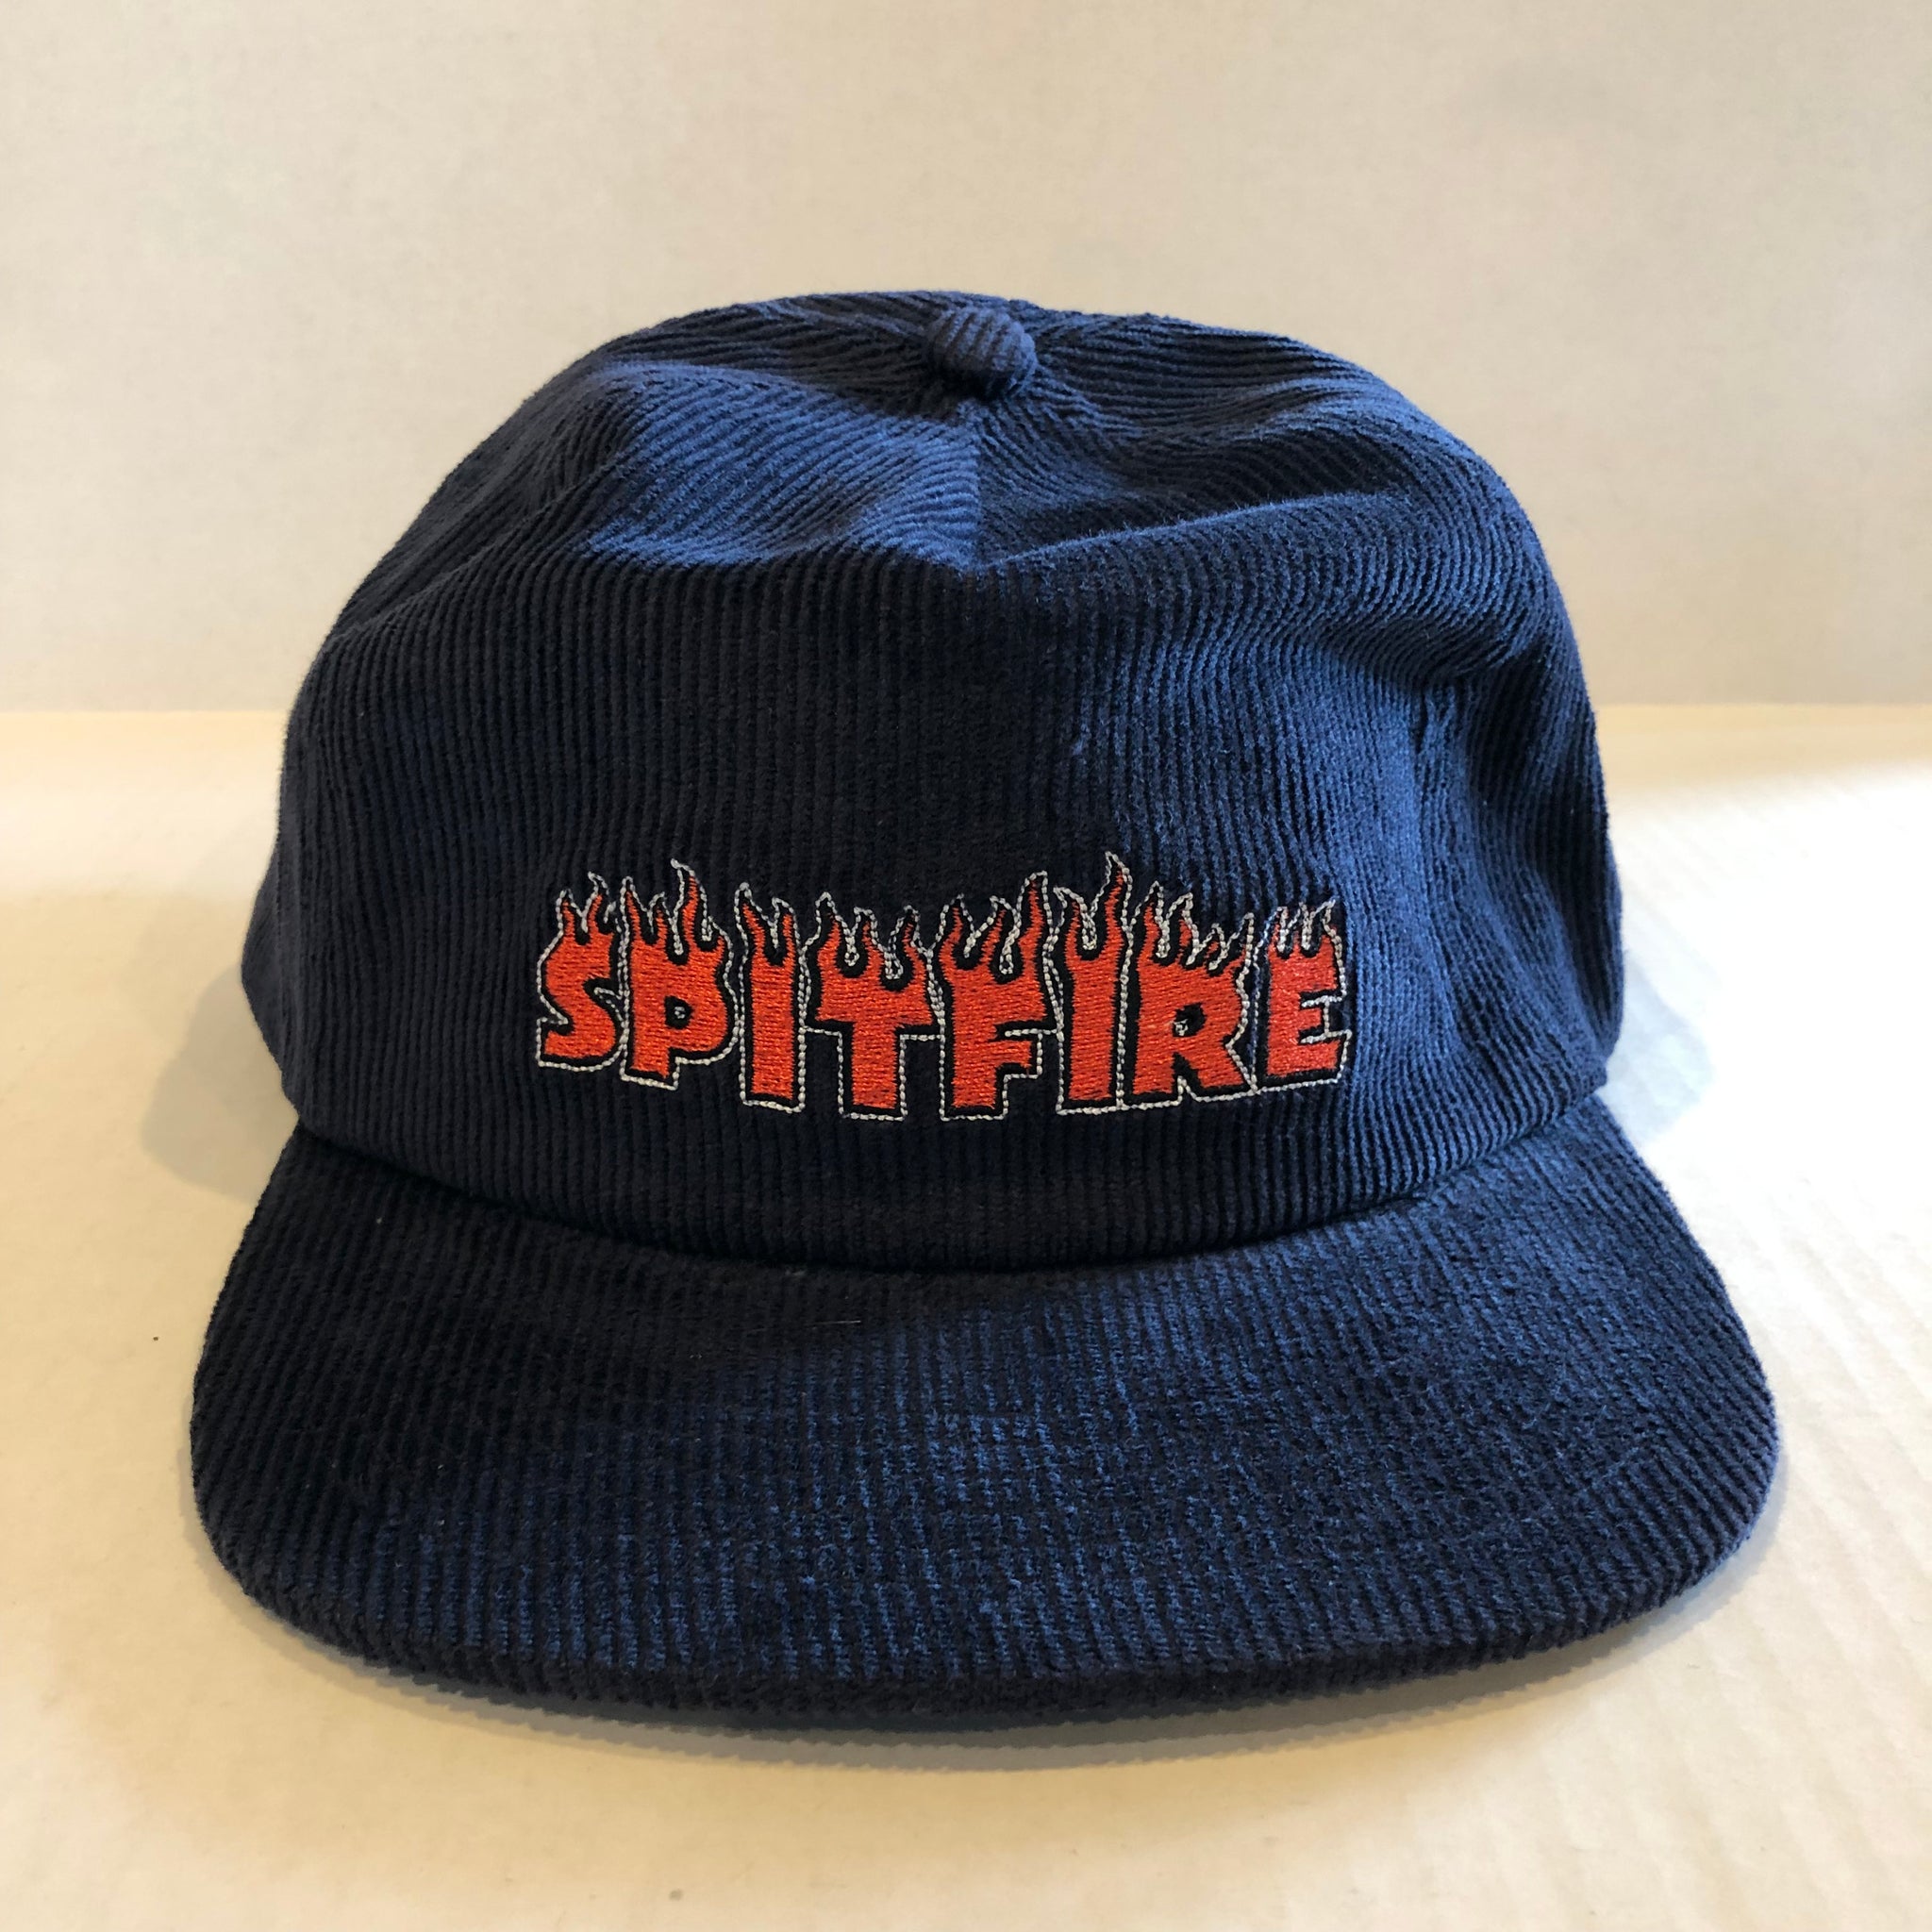 Spitfire Flash Fire Snapback Hat - Blue